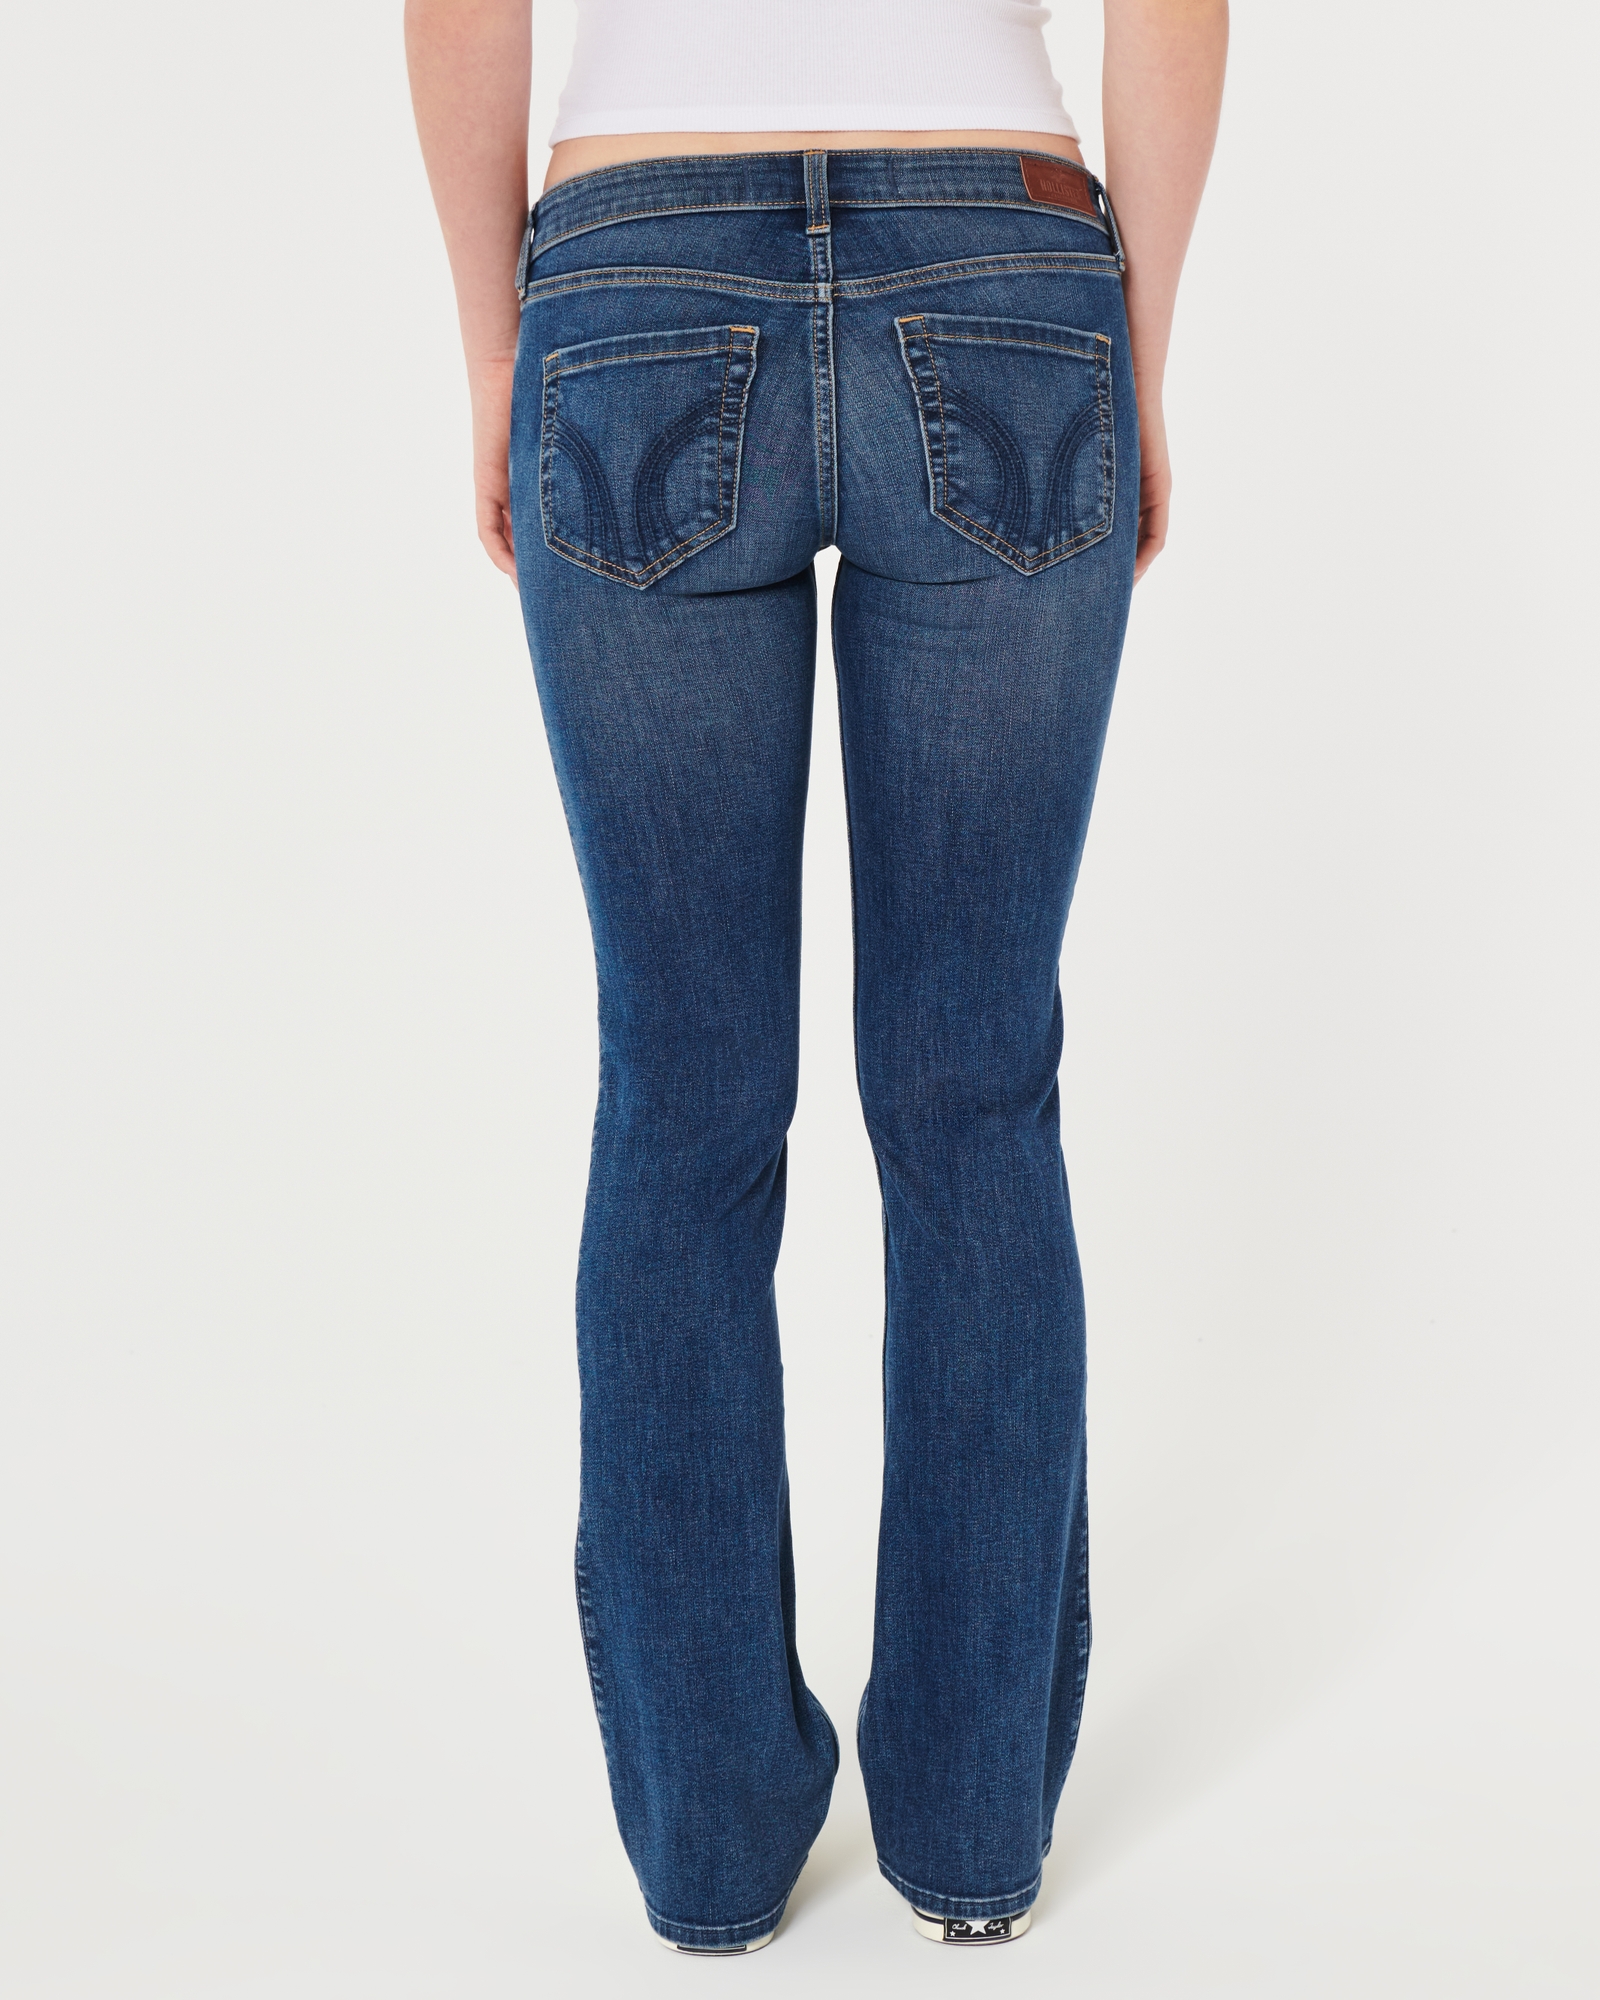 Escada Pants Vintage Y2k Jeans Women Bootcut Jeans Denim Beaded